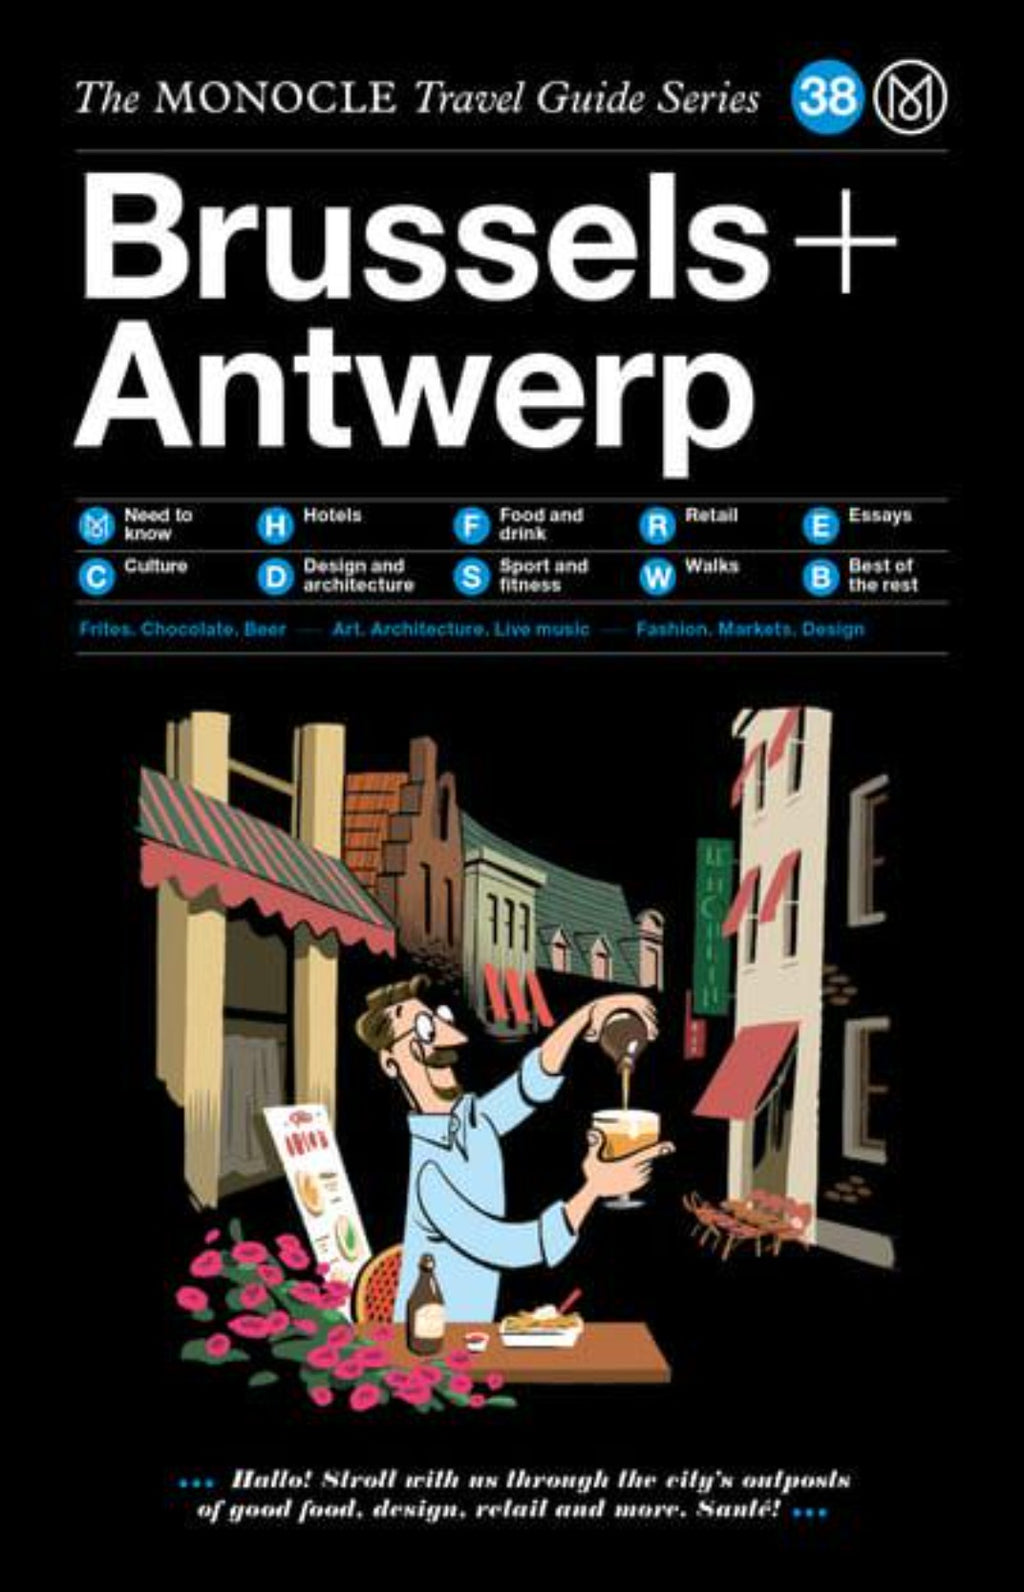 Brussels + Antwerp - The Monocle Travel Guide Series 38